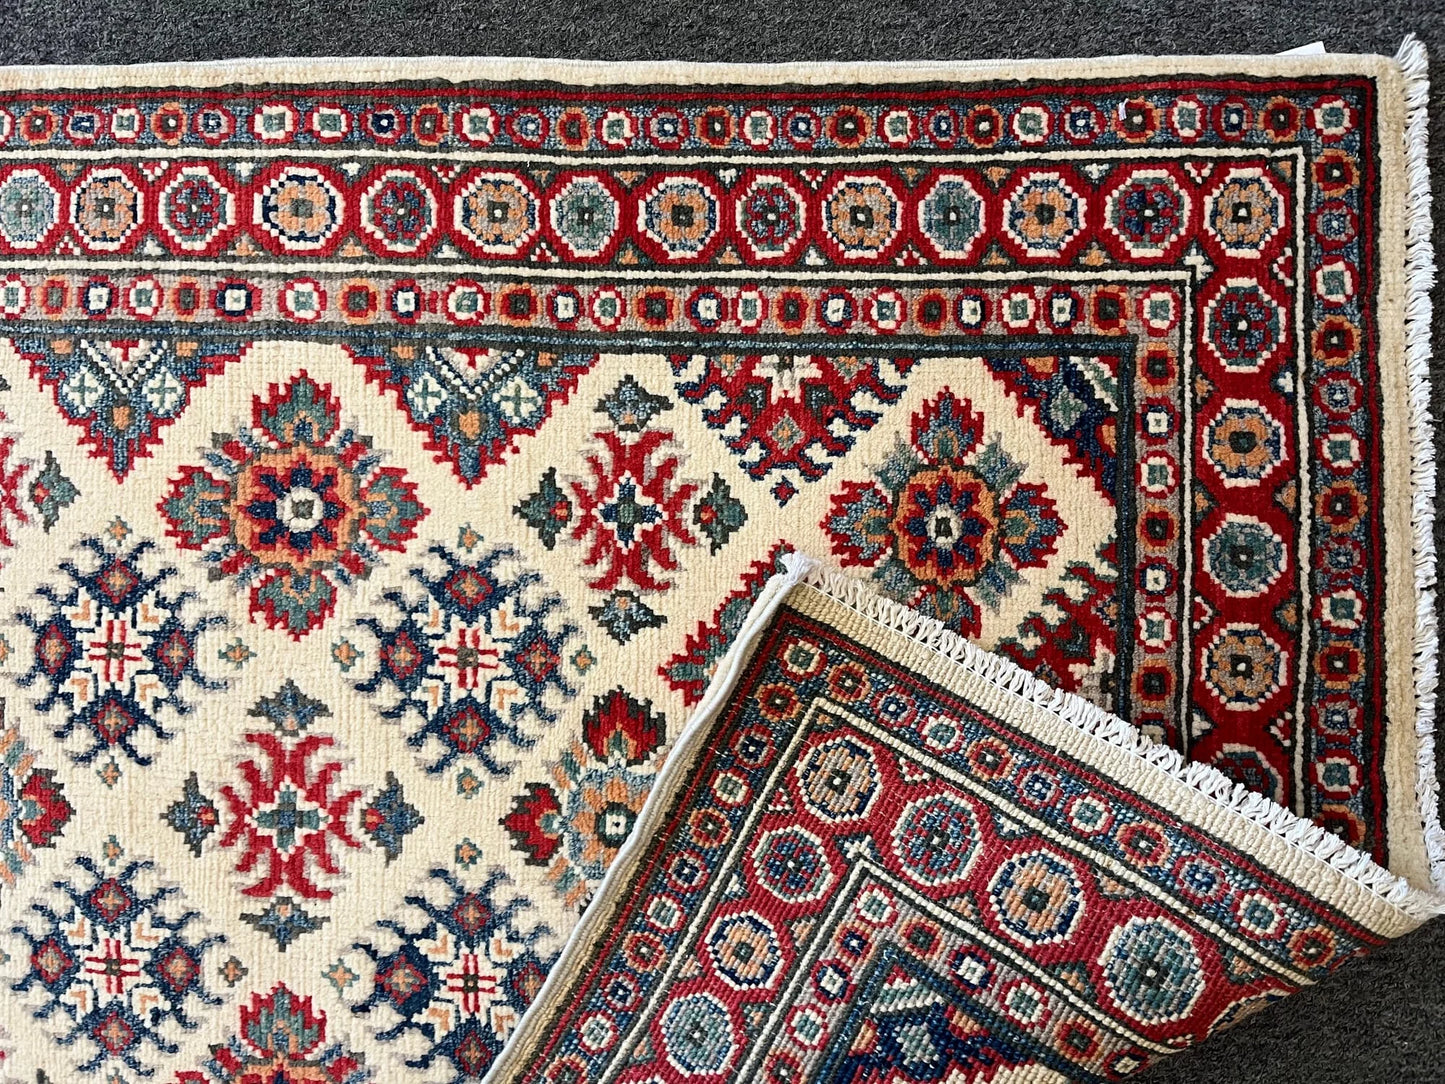 Kazak Beige and Red 3X4 Handmade Wool Rug # 12572